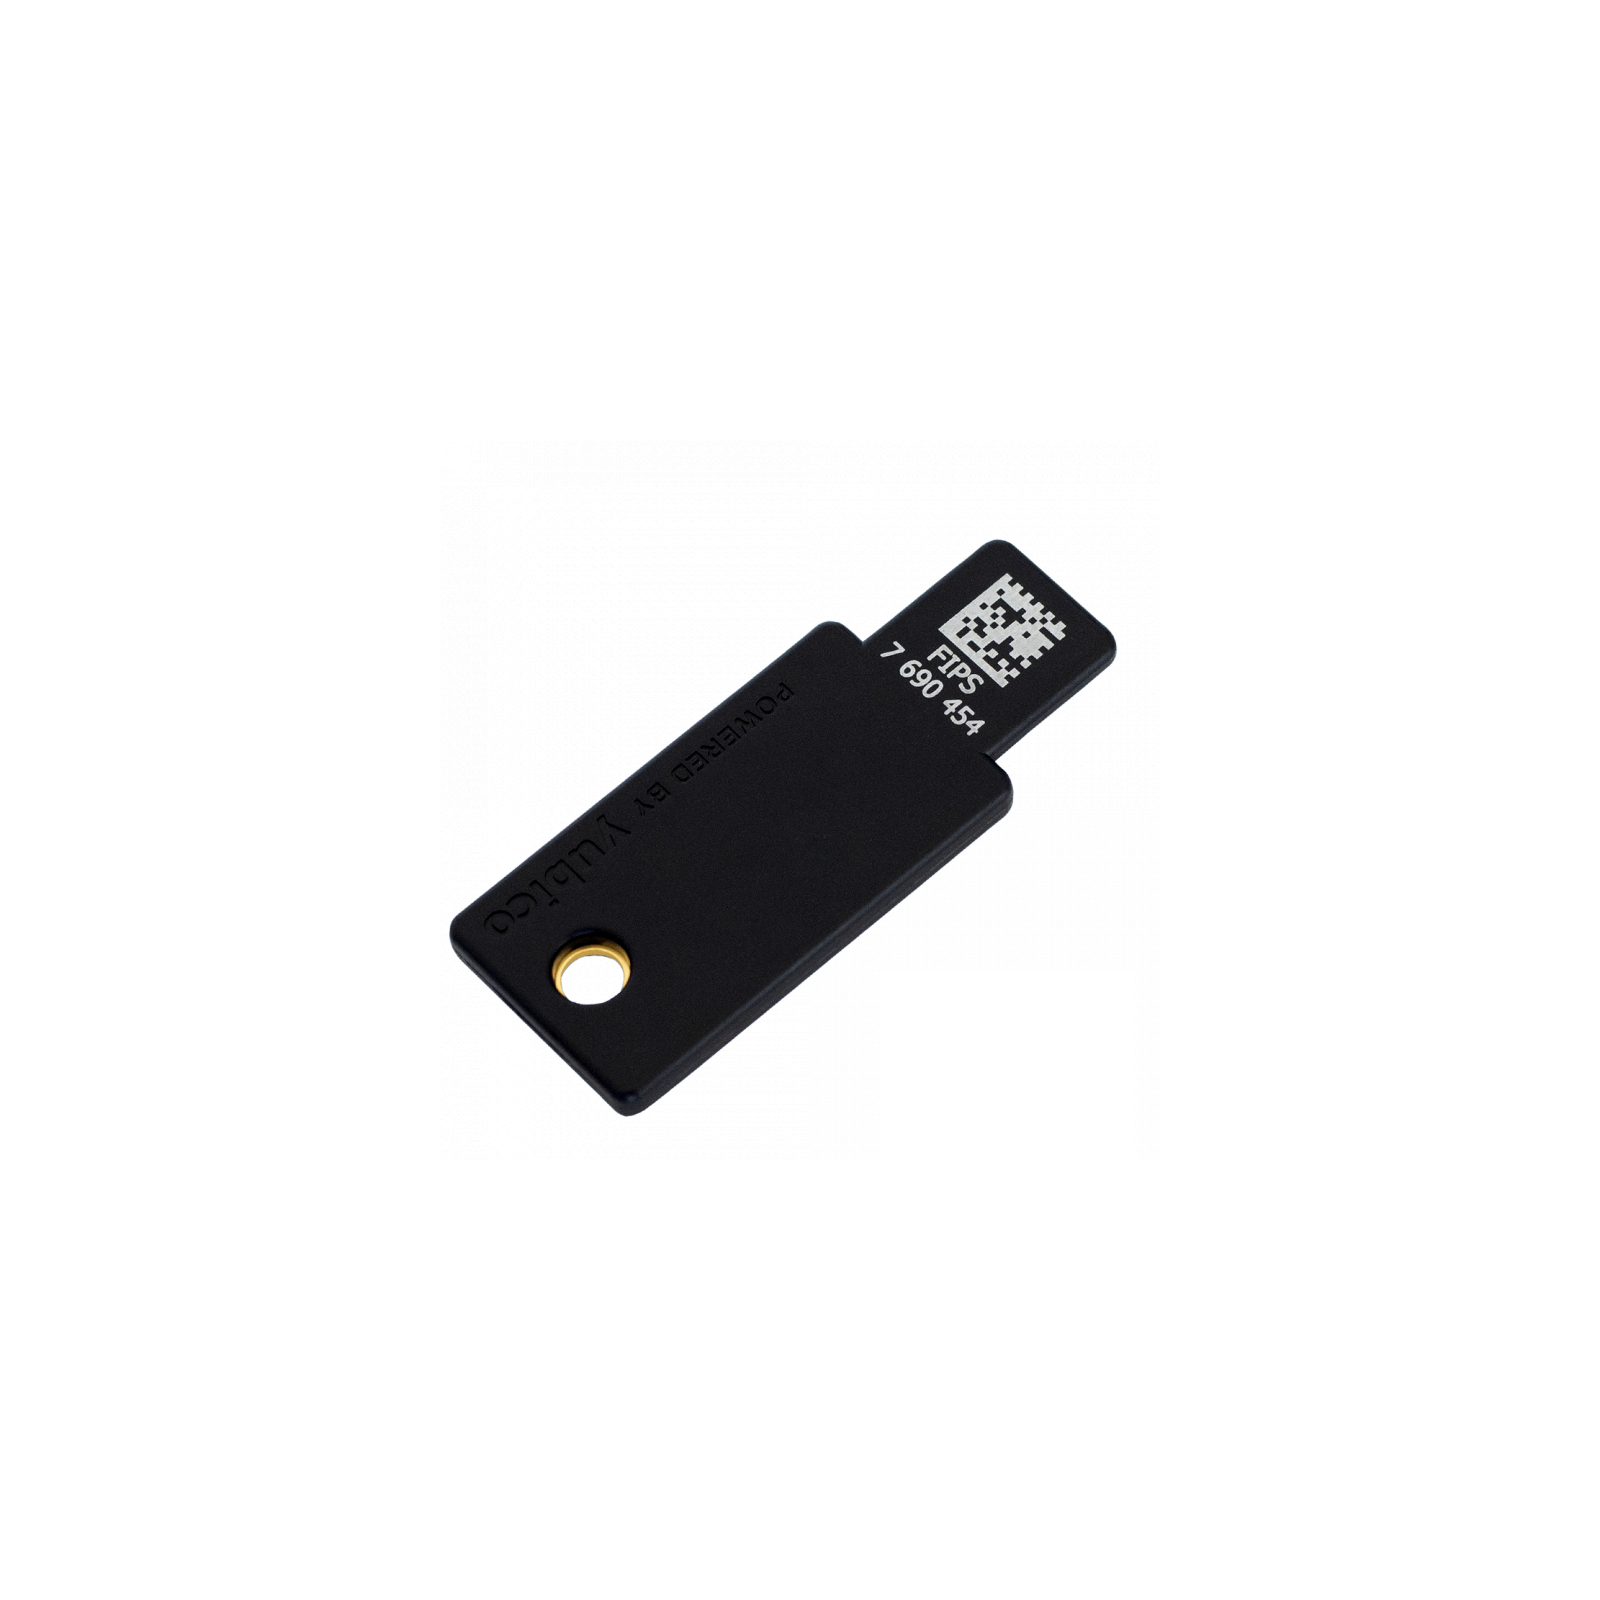 Аппаратный ключ безопасности Yubico YubiKey 5 NFC FIPS (YubiKey_5_NFC_FIPS) изображение 3